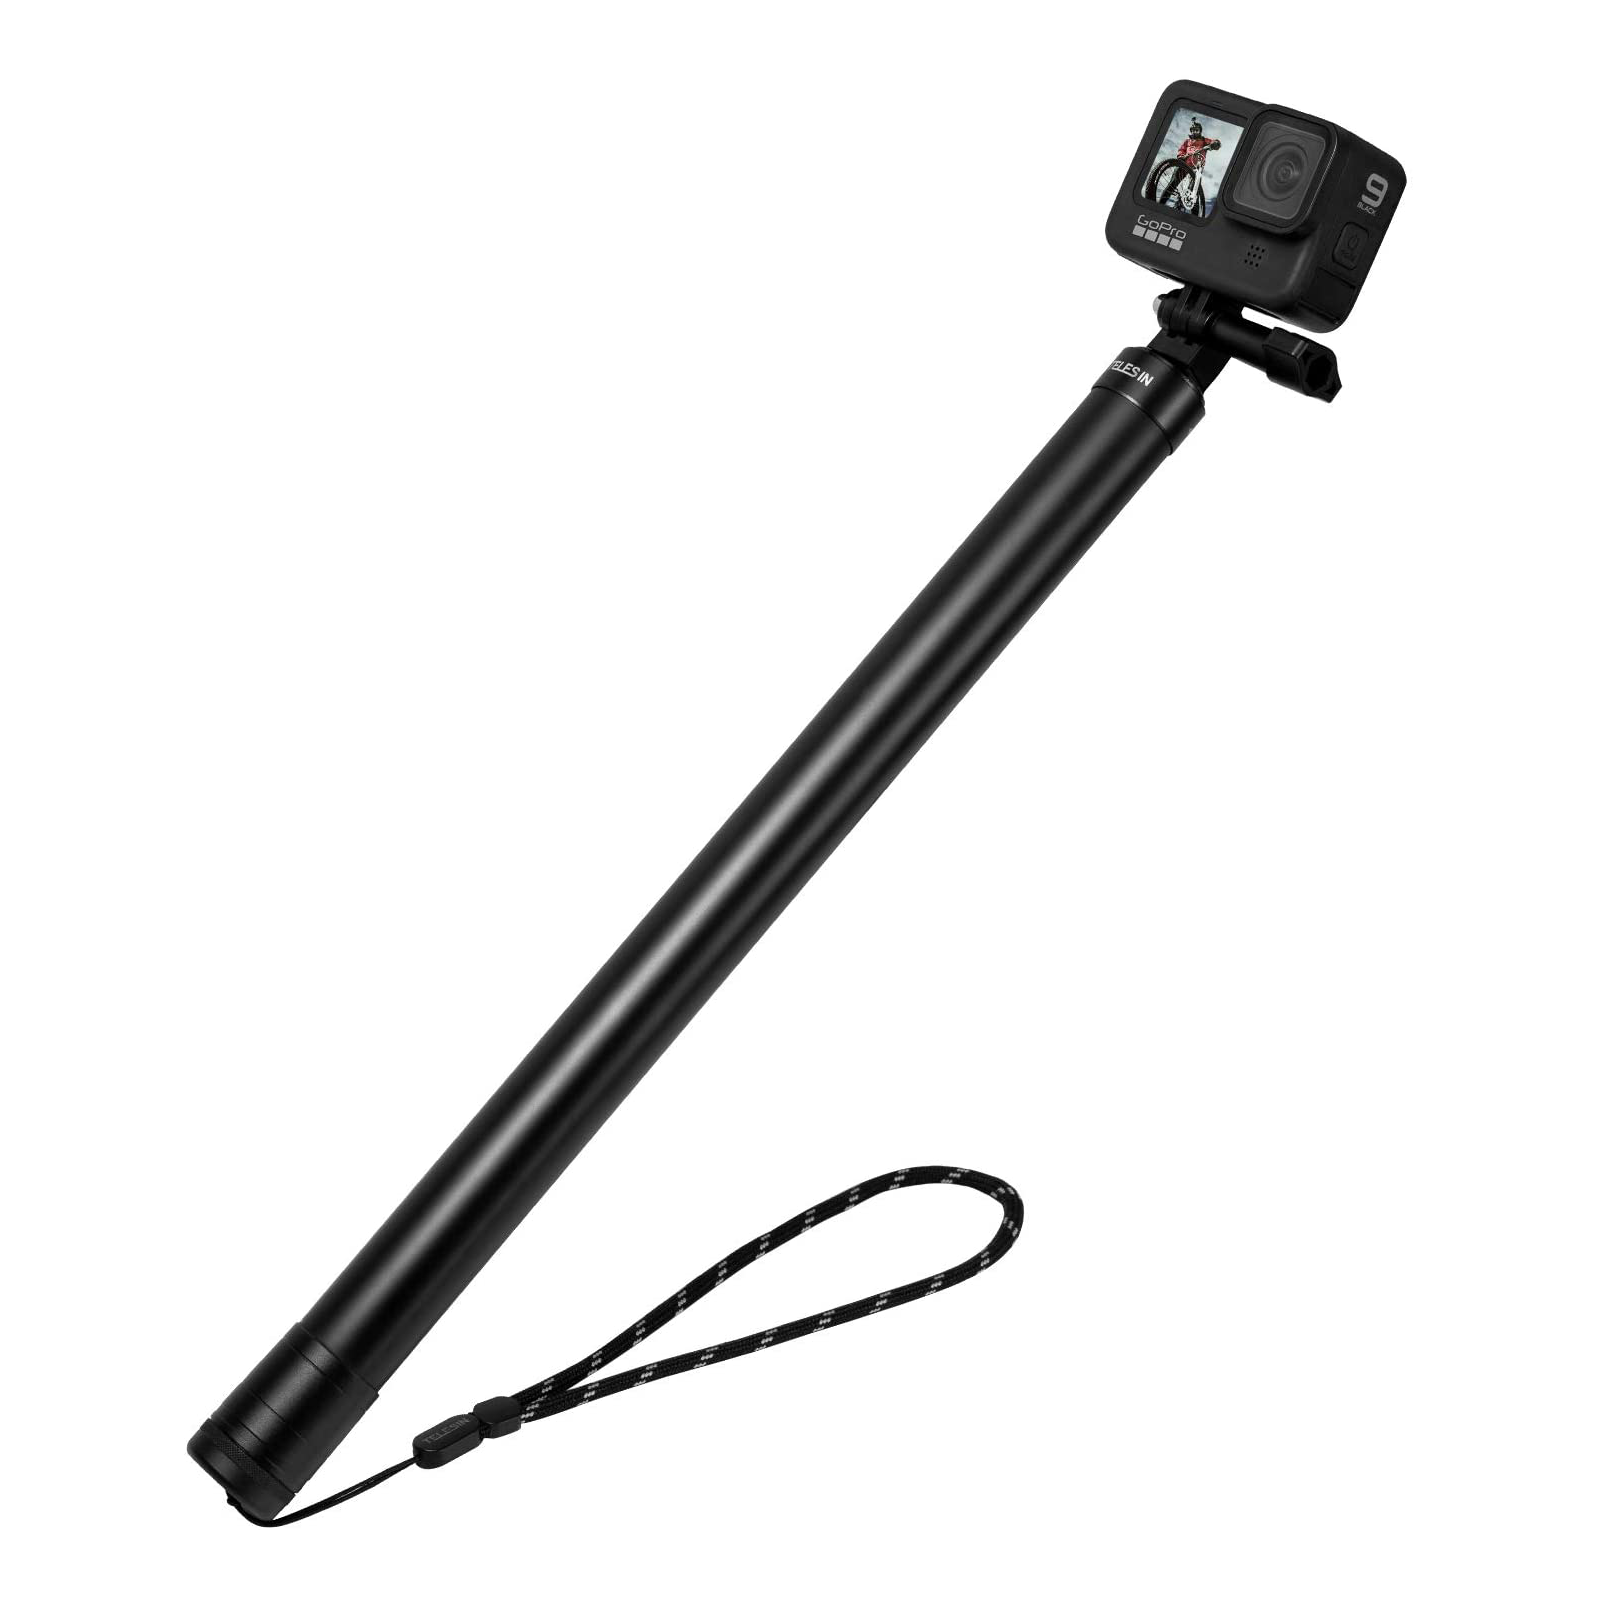 TELESIN Ultra Long 118''/3 Meters 106''/2.7 Meters Selfie Stick For Sports Camera